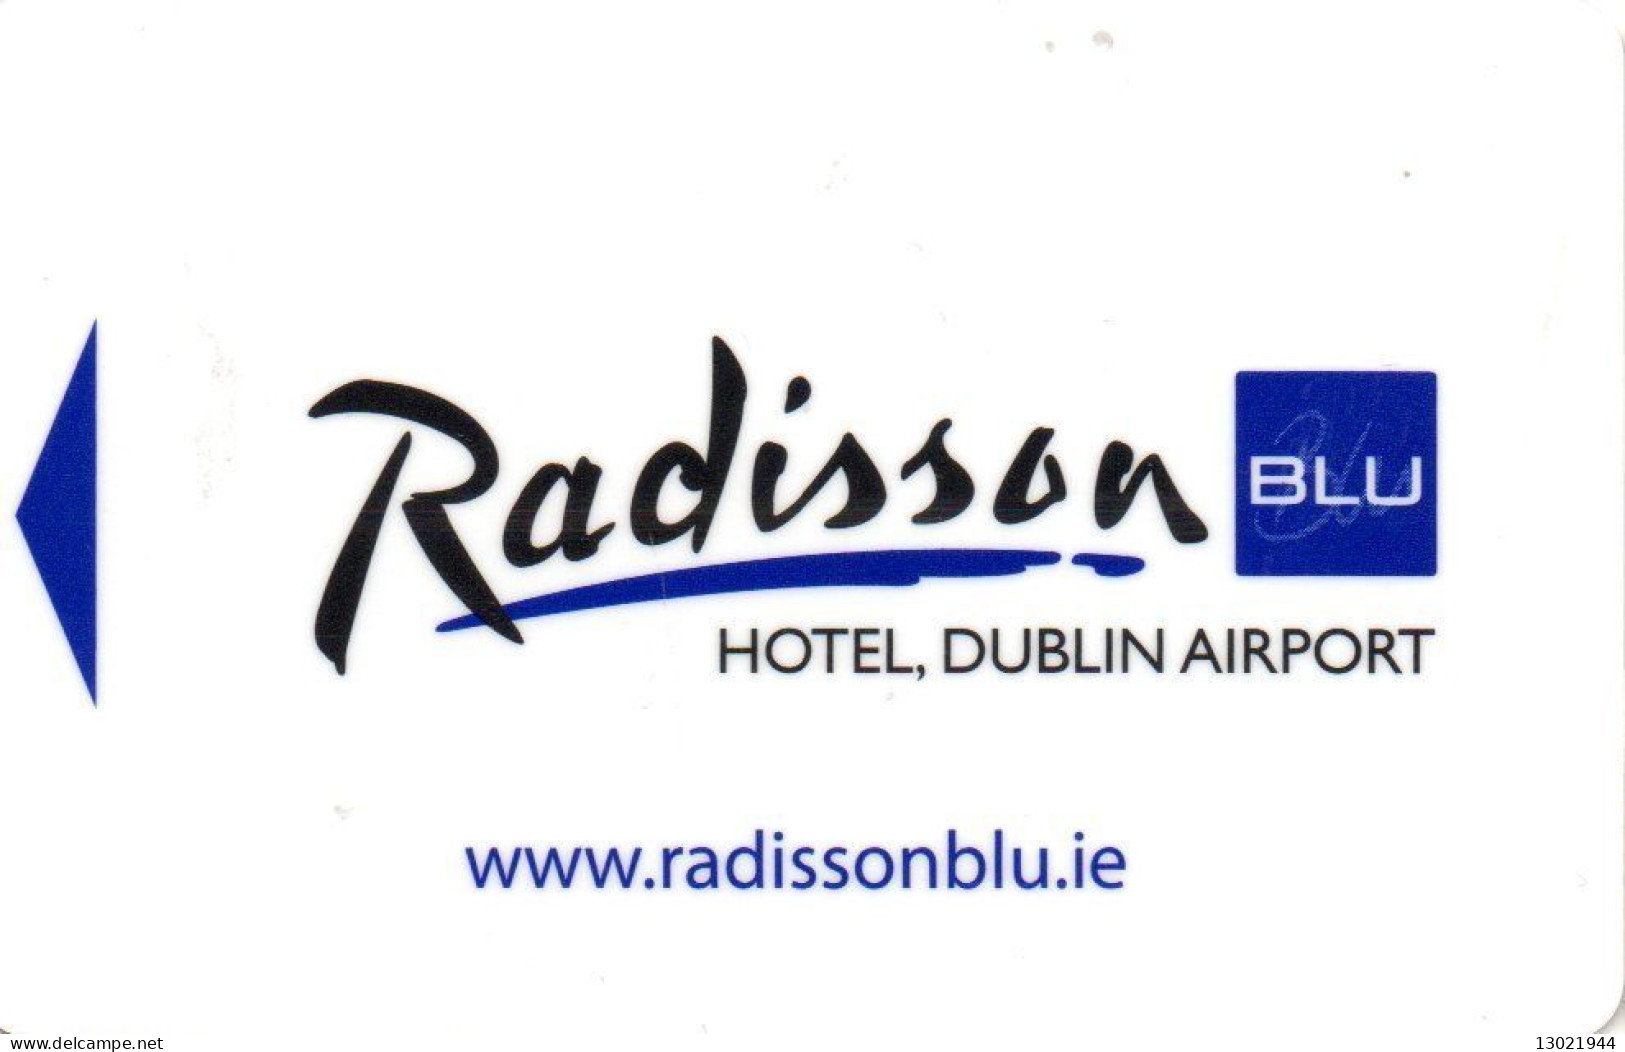 IRLANDA  KEY HOTEL  Radisson Blu Hotel, Dublin Airport - Hotelsleutels (kaarten)